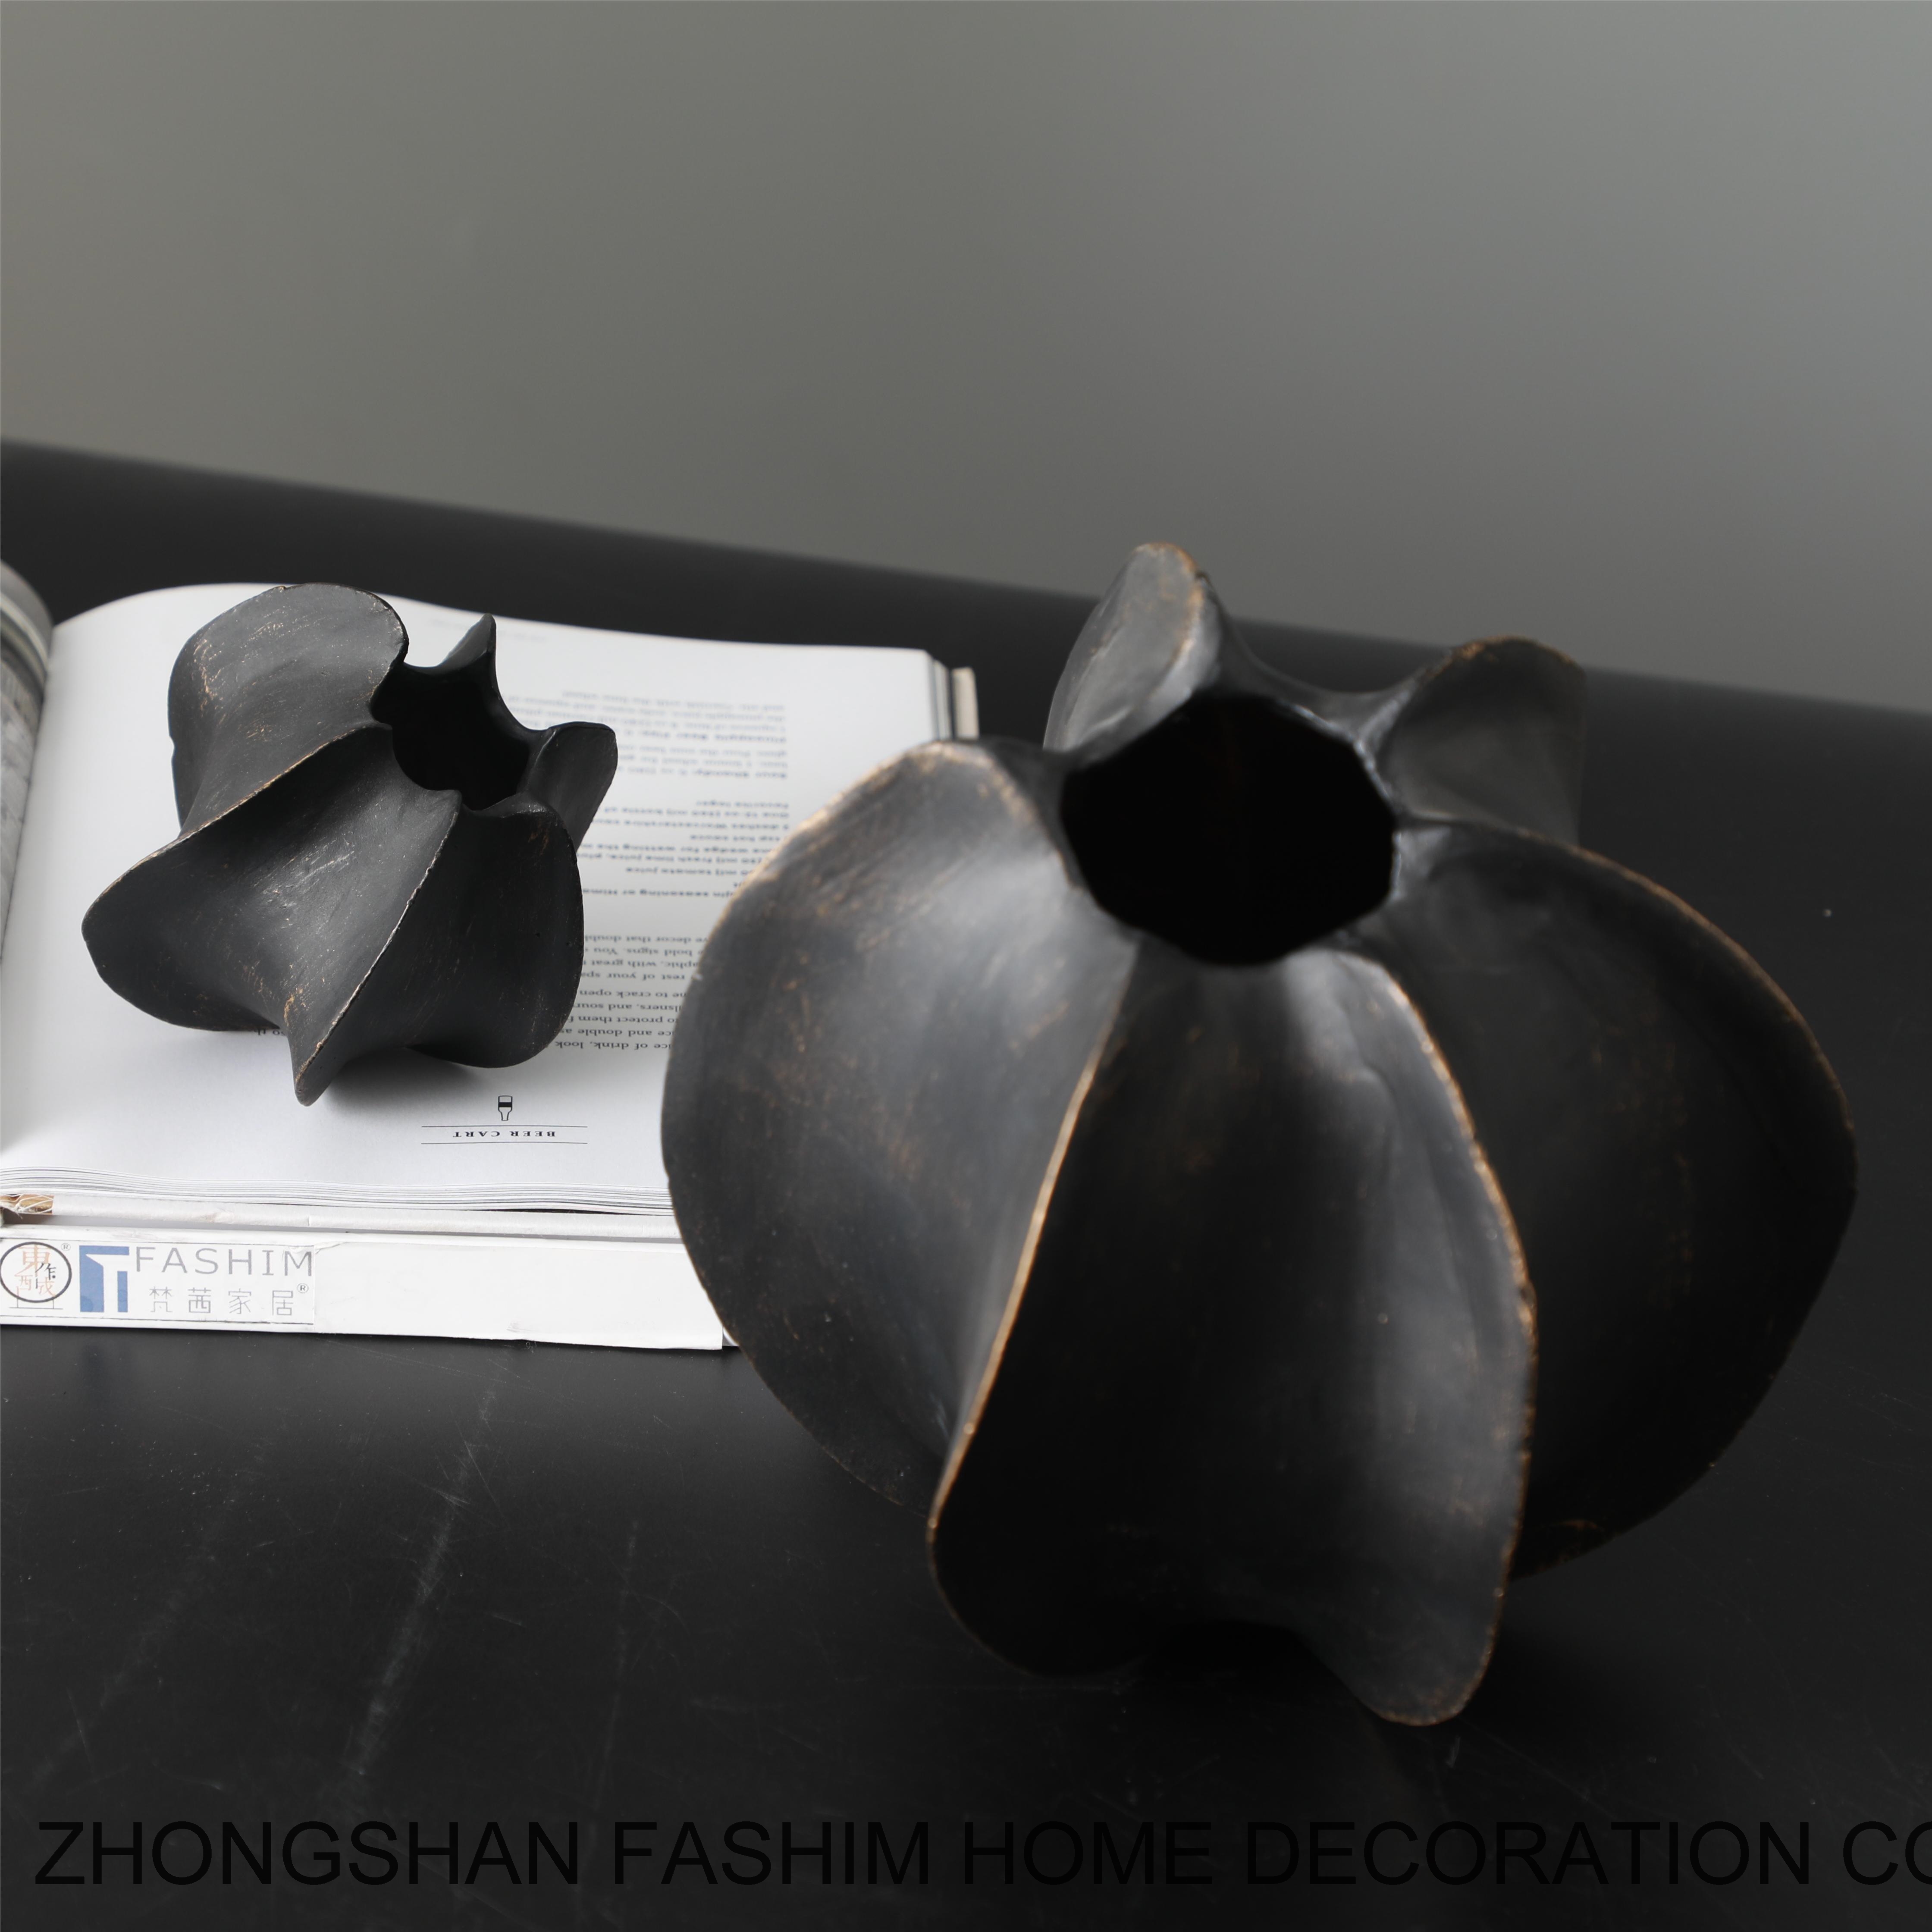 Fashimdecor modern home decoration iron sculpture ornaments